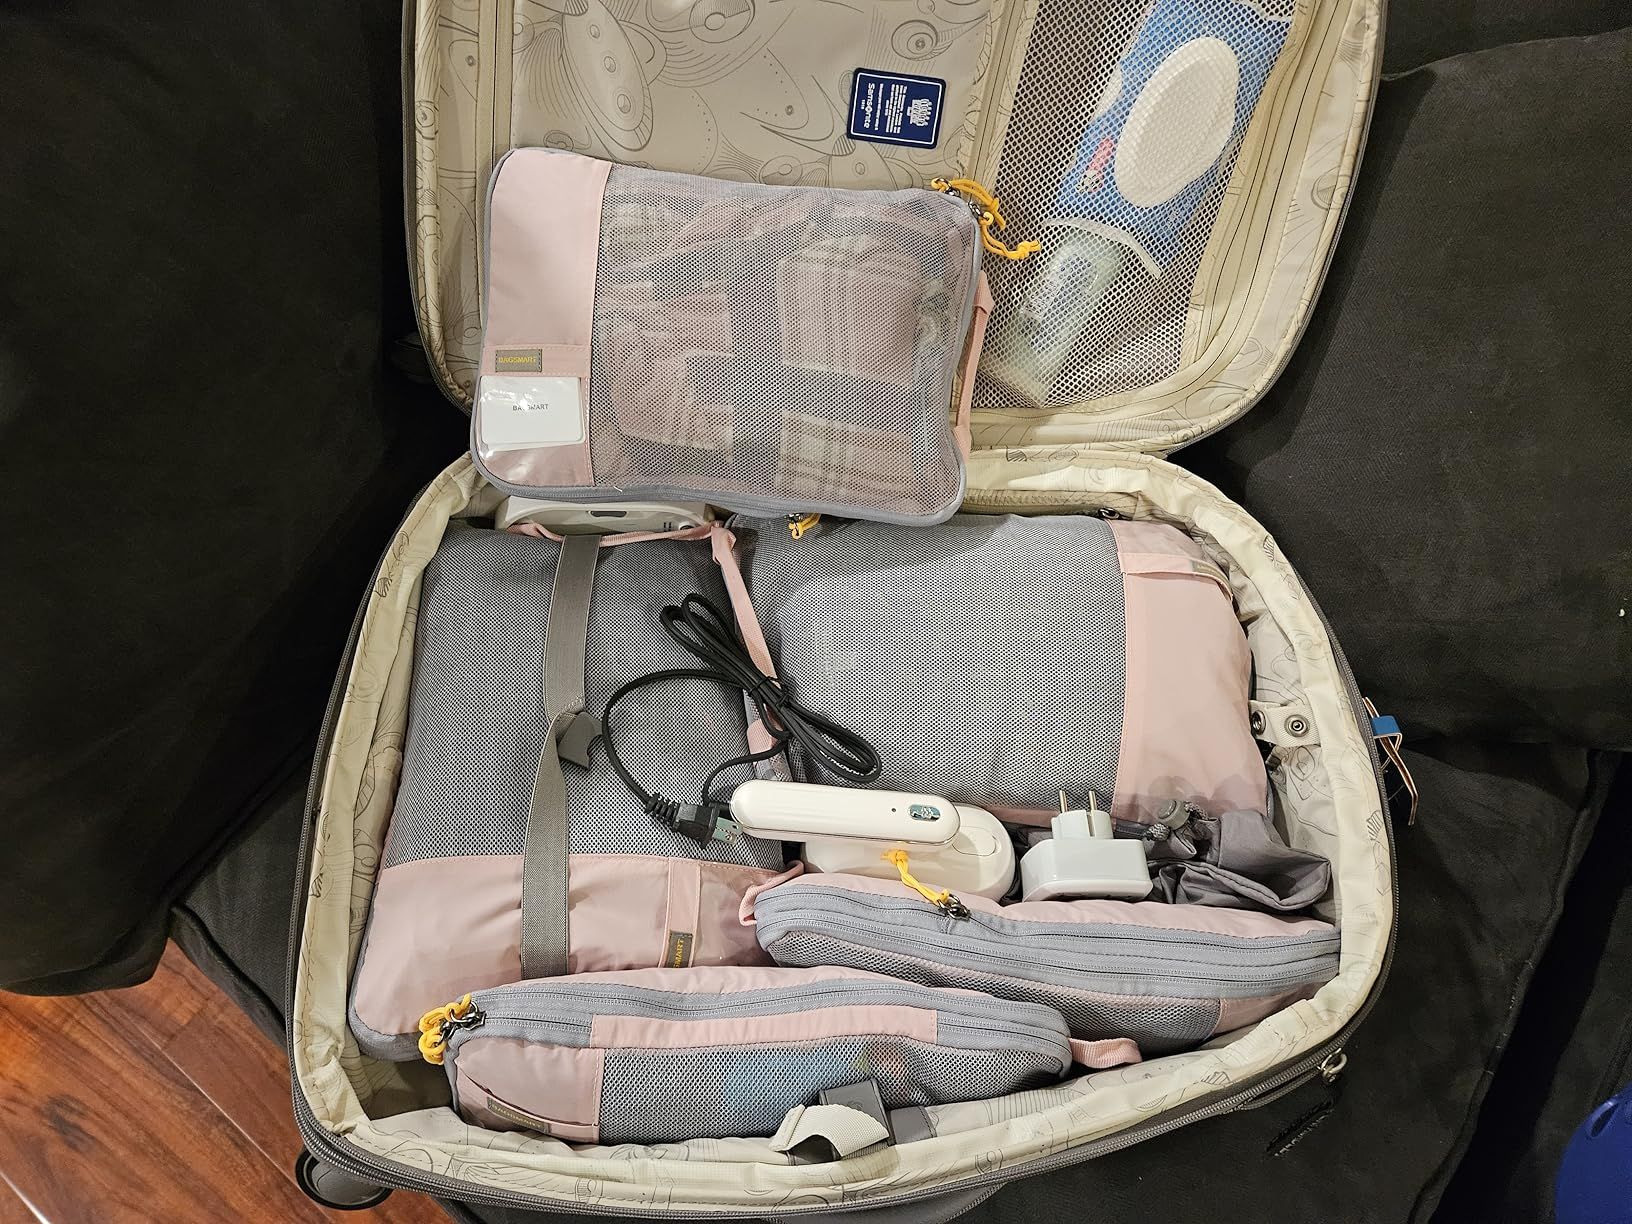 Compression Packing Cubes for Suitcases, BAGSMART 6 Set/4 Set/2 Set Travel Essentials for Travel ... | Amazon (US)